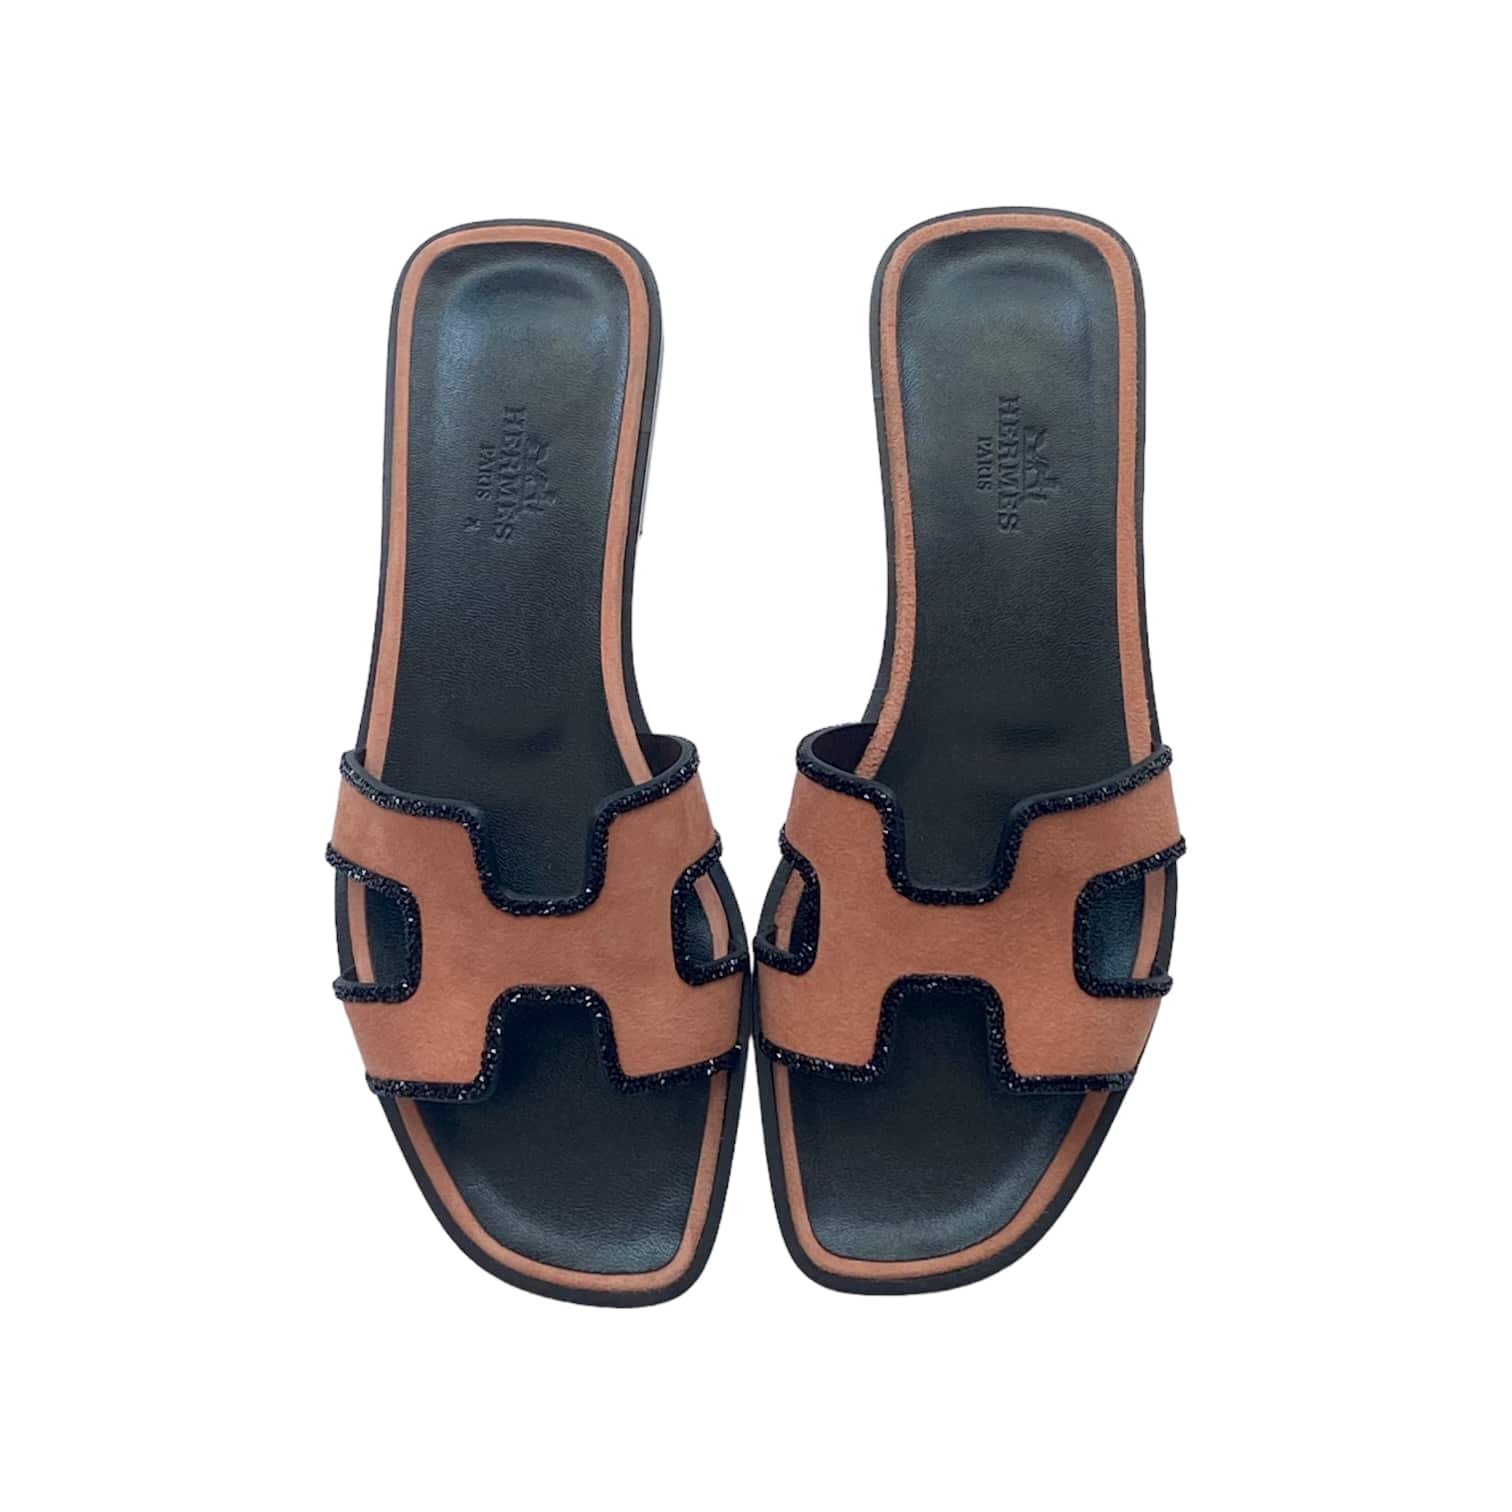 Mount Vesuv Sæbe fond Hermes Oran sandal Black/Orange Glitter Size 36 EU - The Luxury Flavor